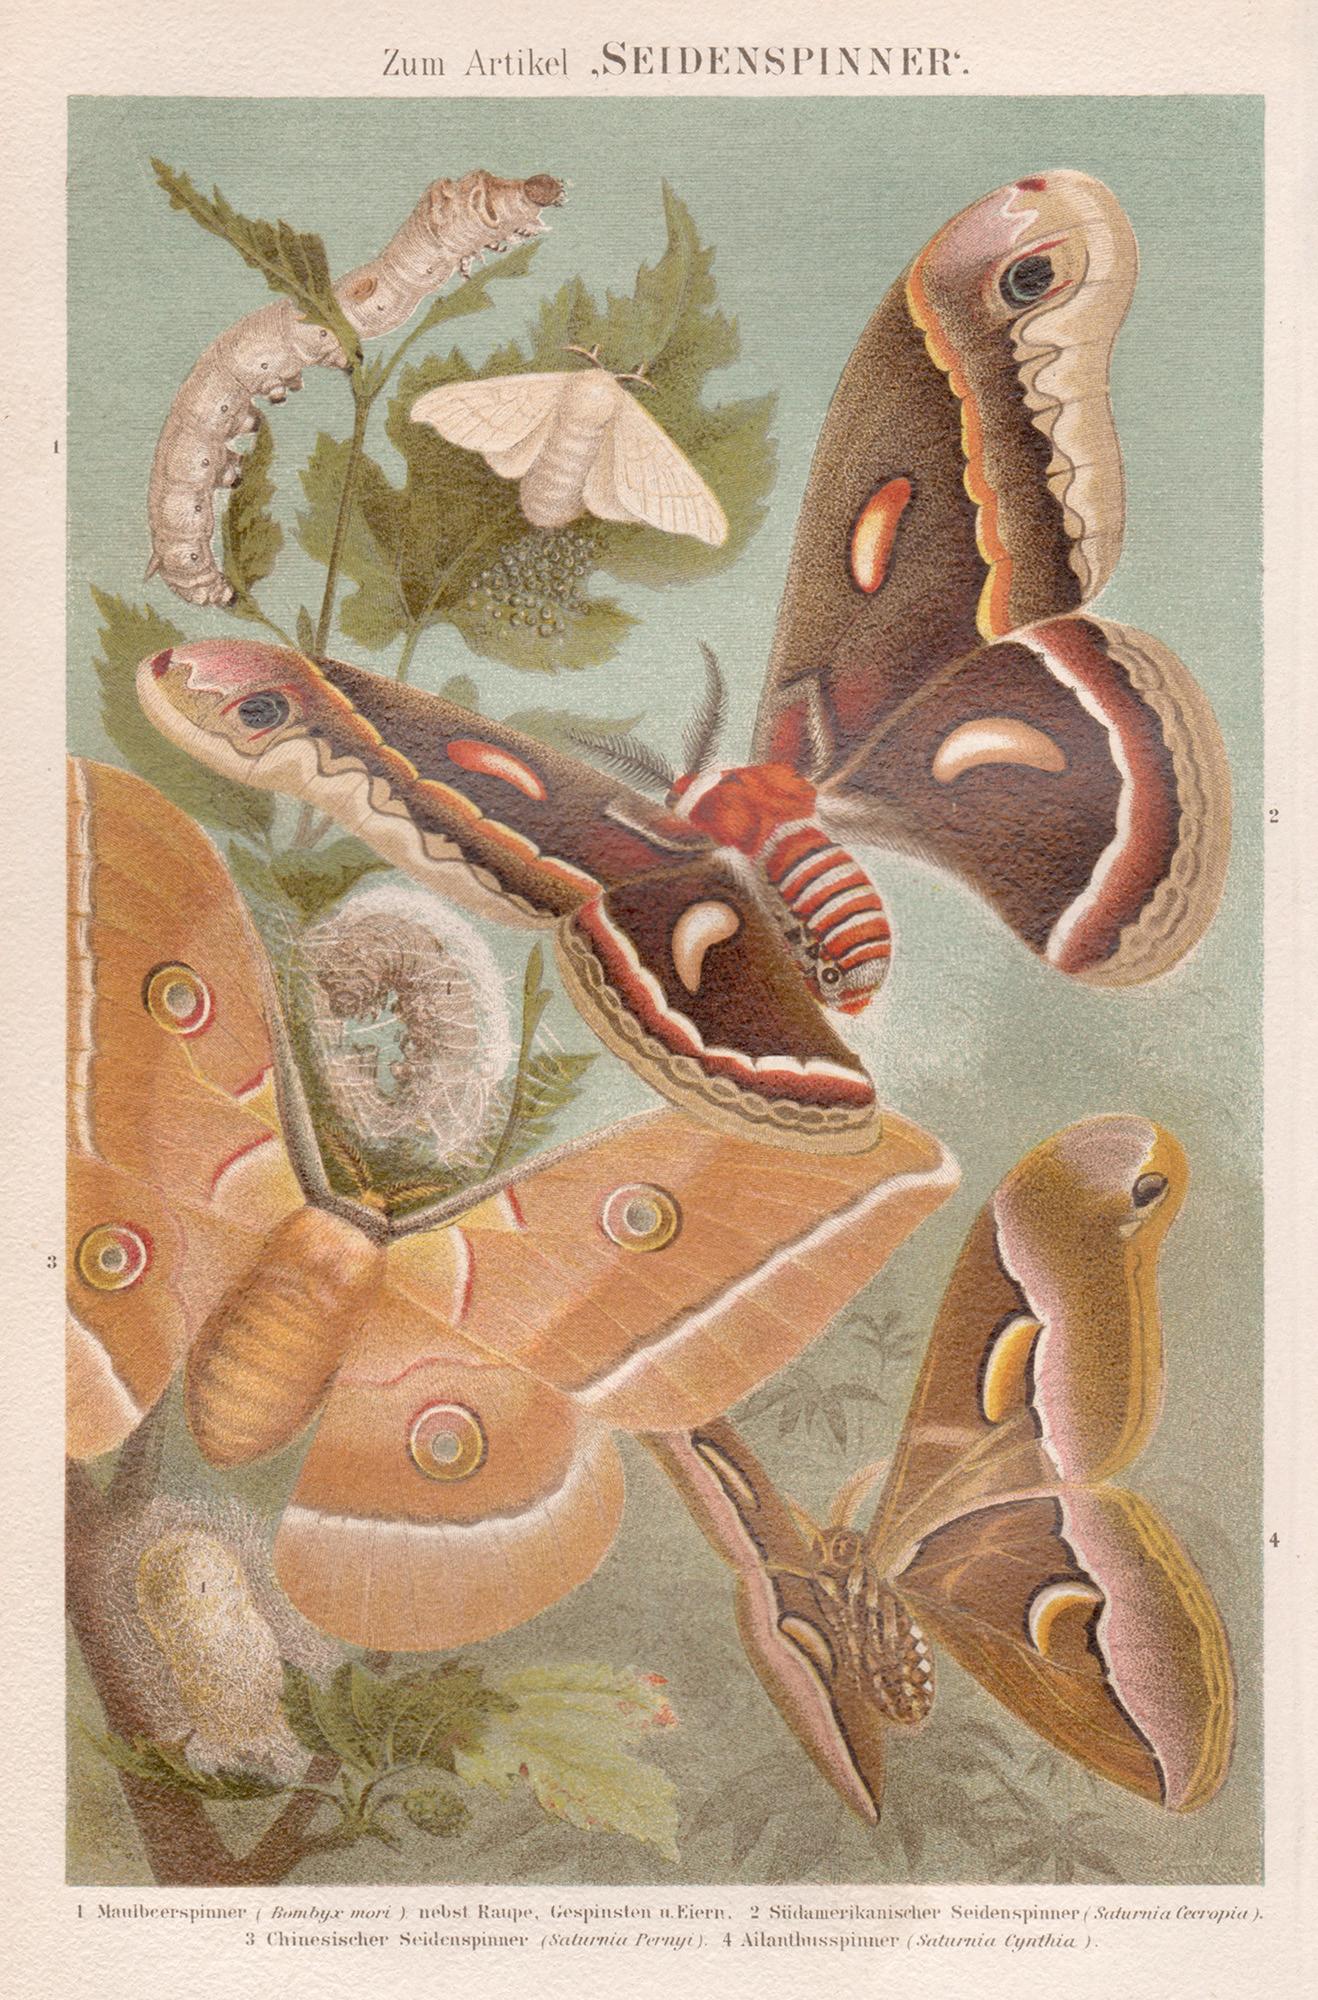 Unknown Animal Print - Seidenspinner (Silk spinner), German antique natural history print